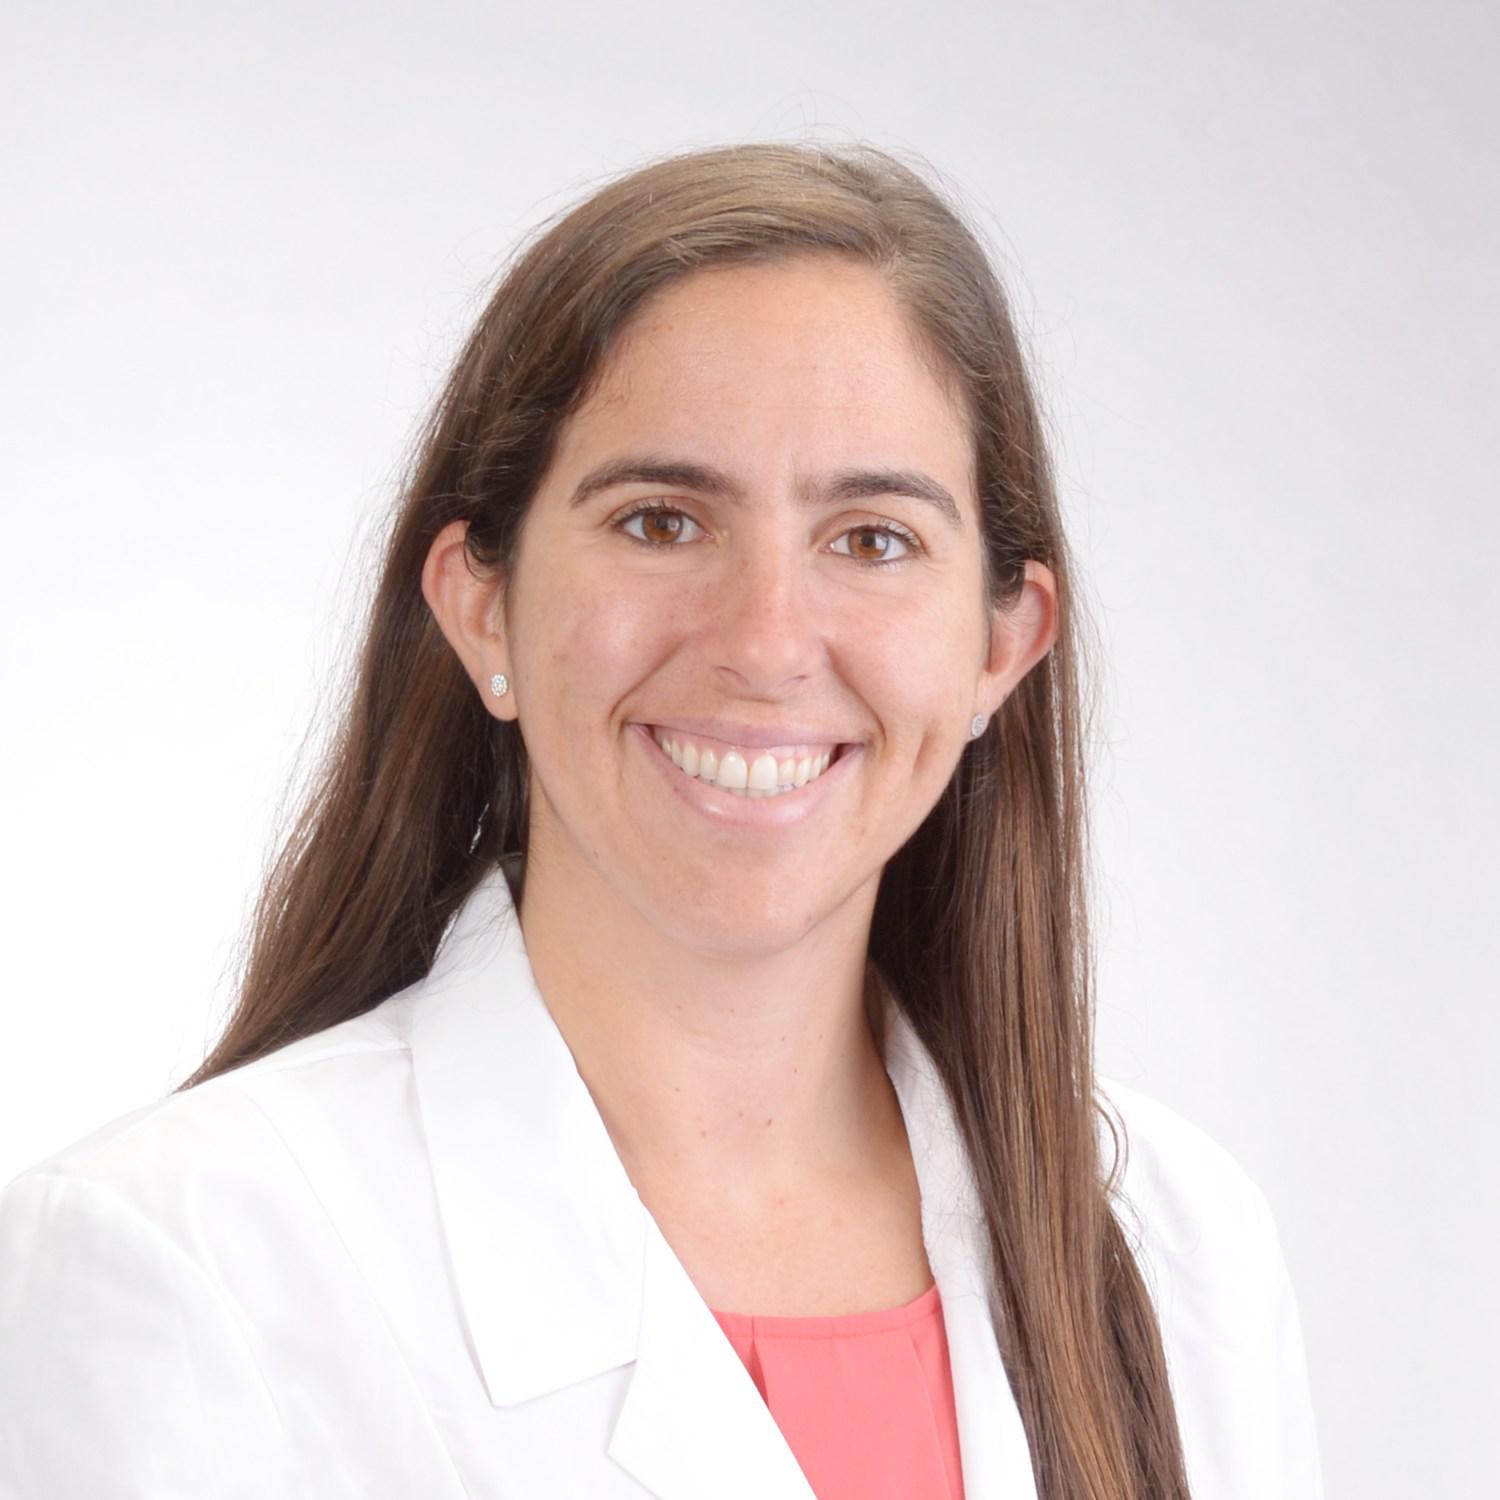 Dr. Jessica P Harris, MD